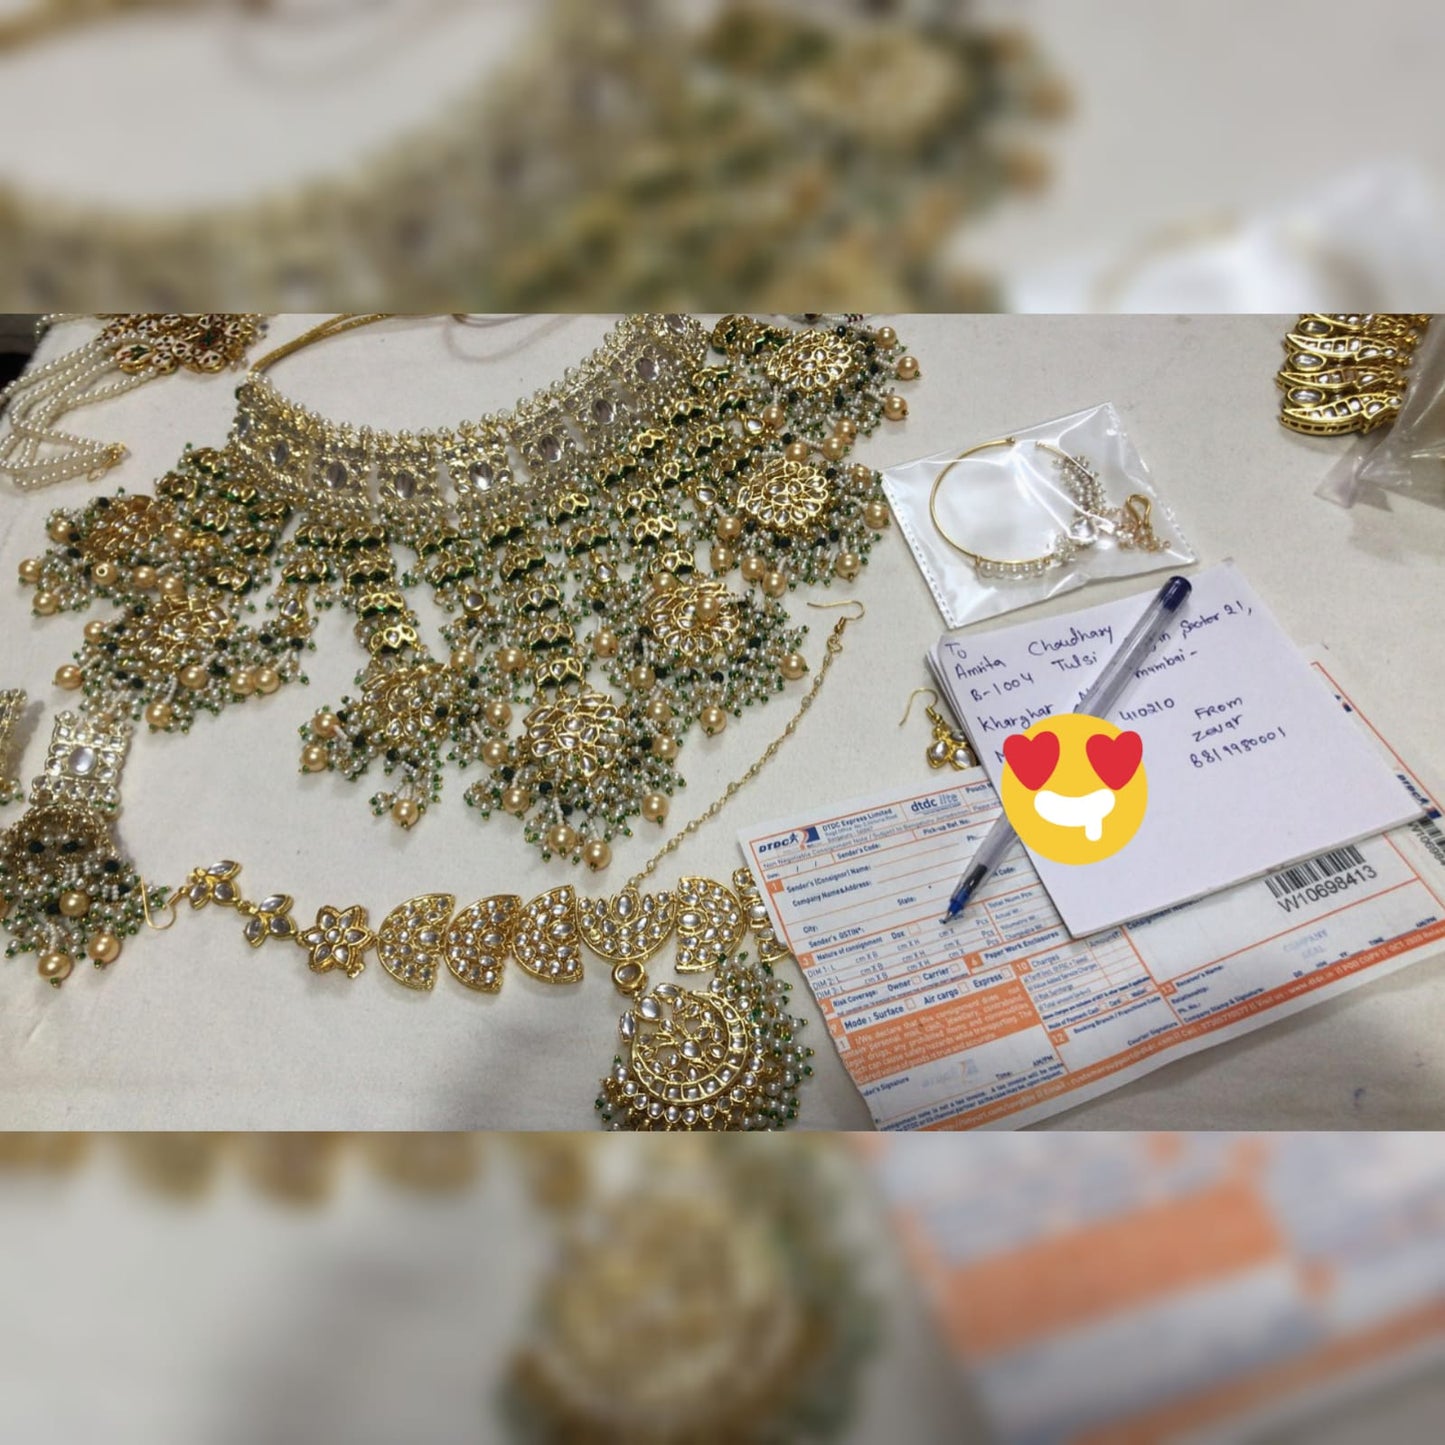 Zevar Jewelry kundan Necklace Earring With Maangtika set by Zevar